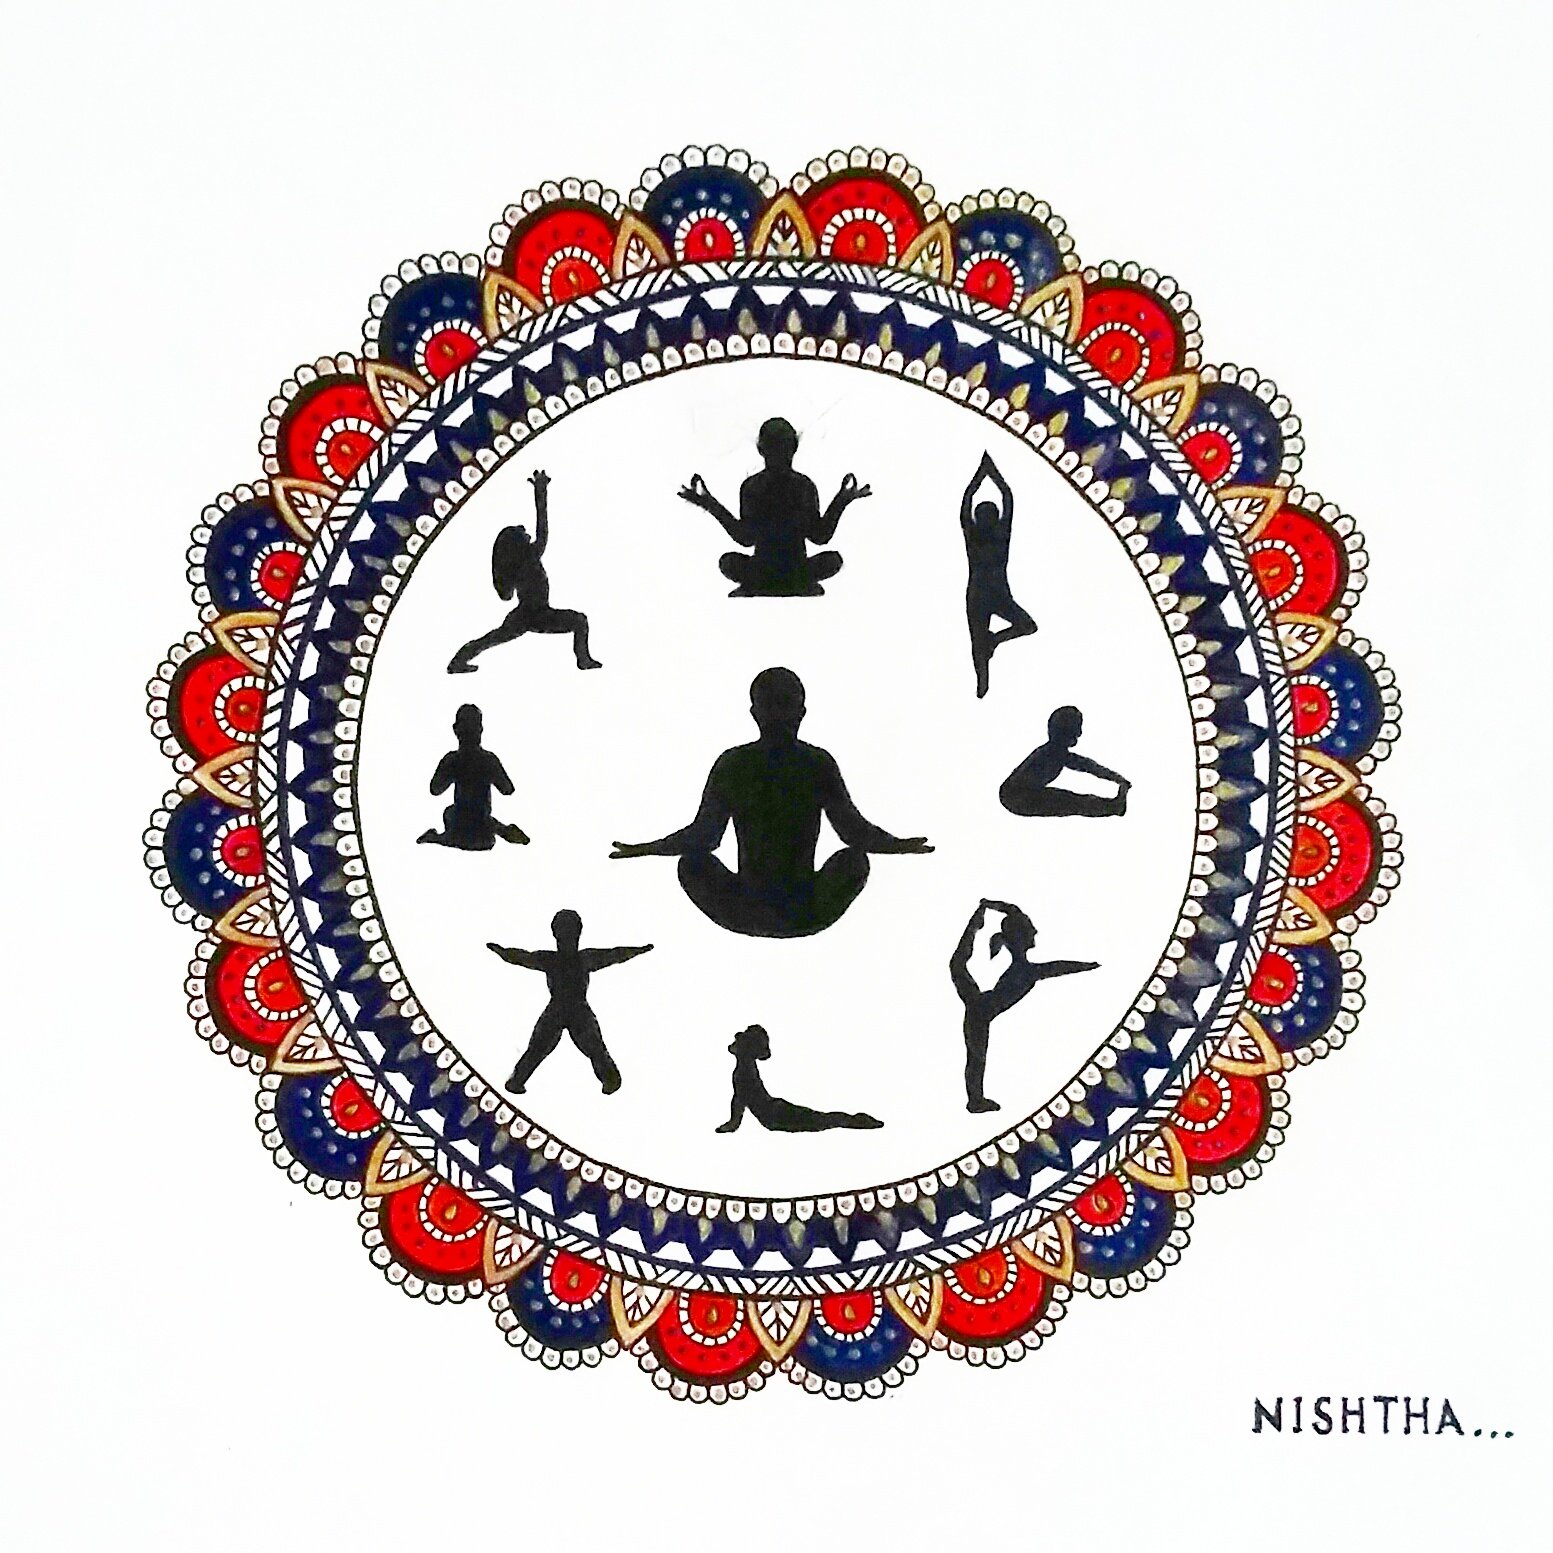 Yoga Mandala